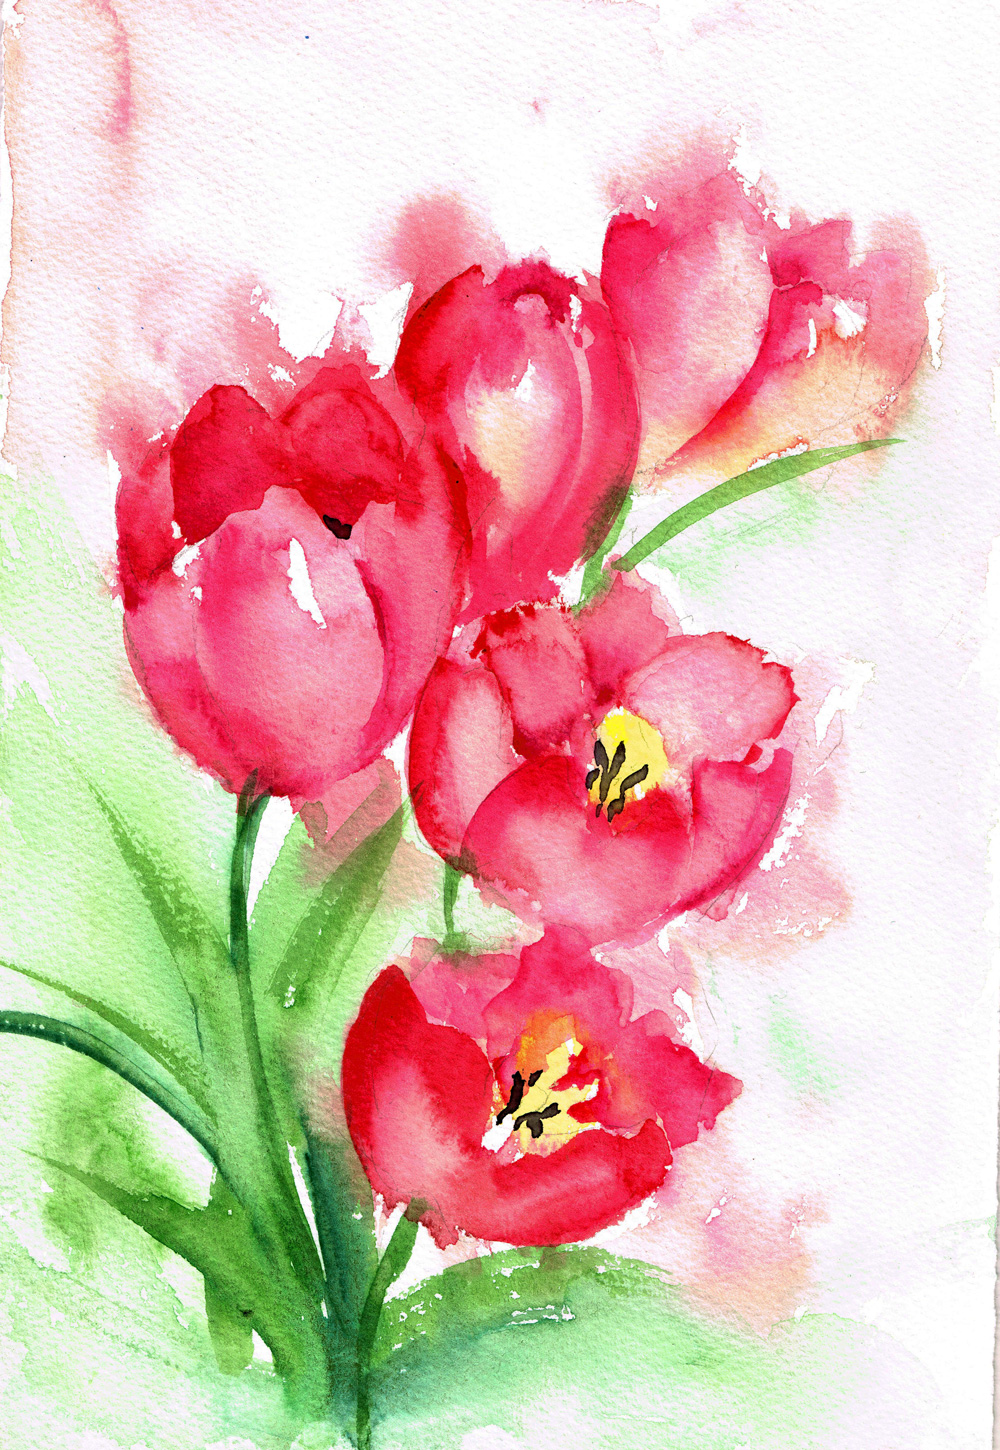 Tulips-no-5-pink-group-kw.jpg